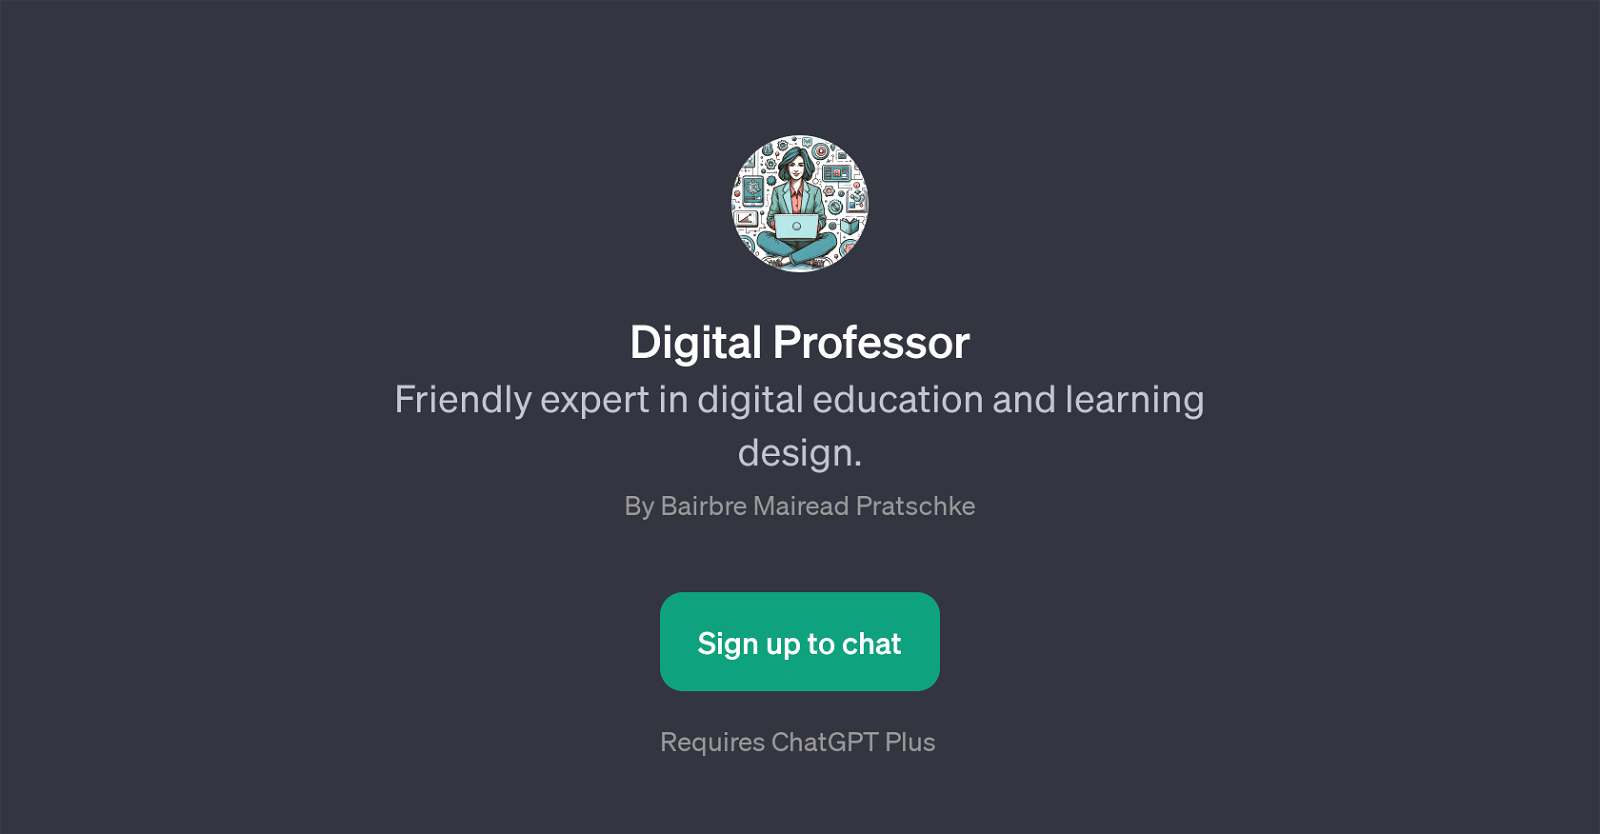 Digital Professor website